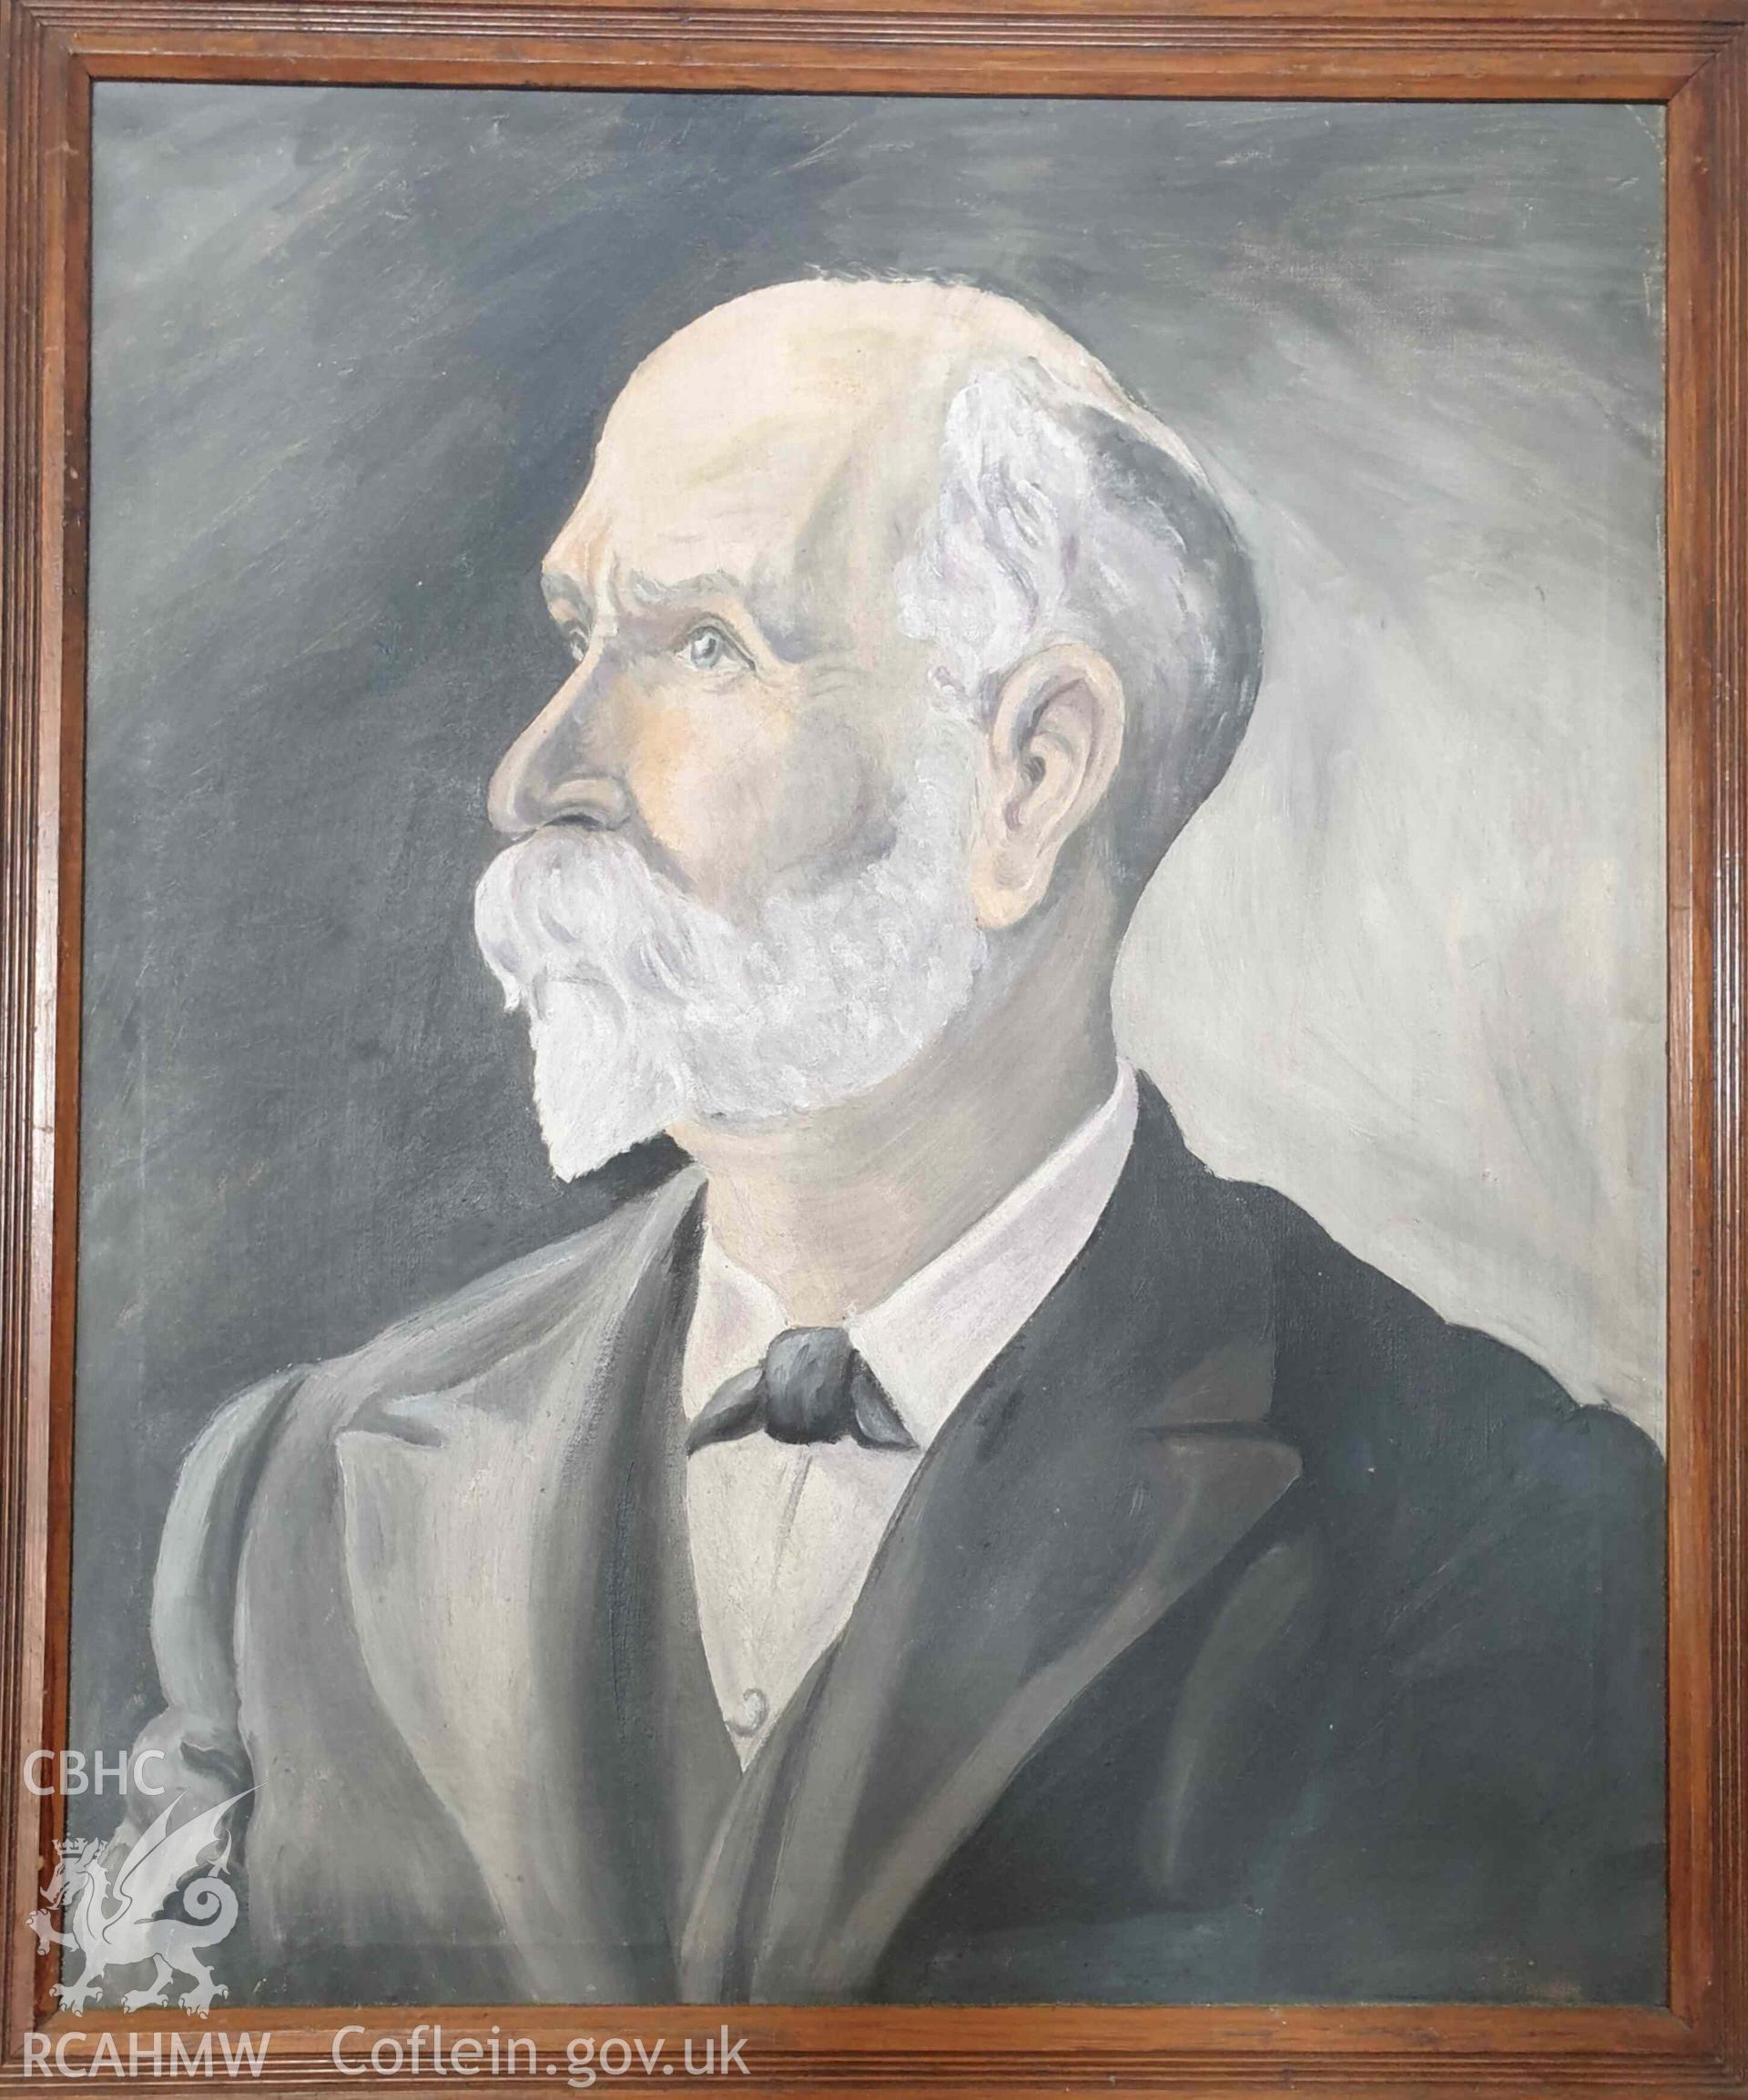 Capel  Salem, Porthmadog - portrait of William John Nicholson - Capel Salem minister from 1892 to 1940.